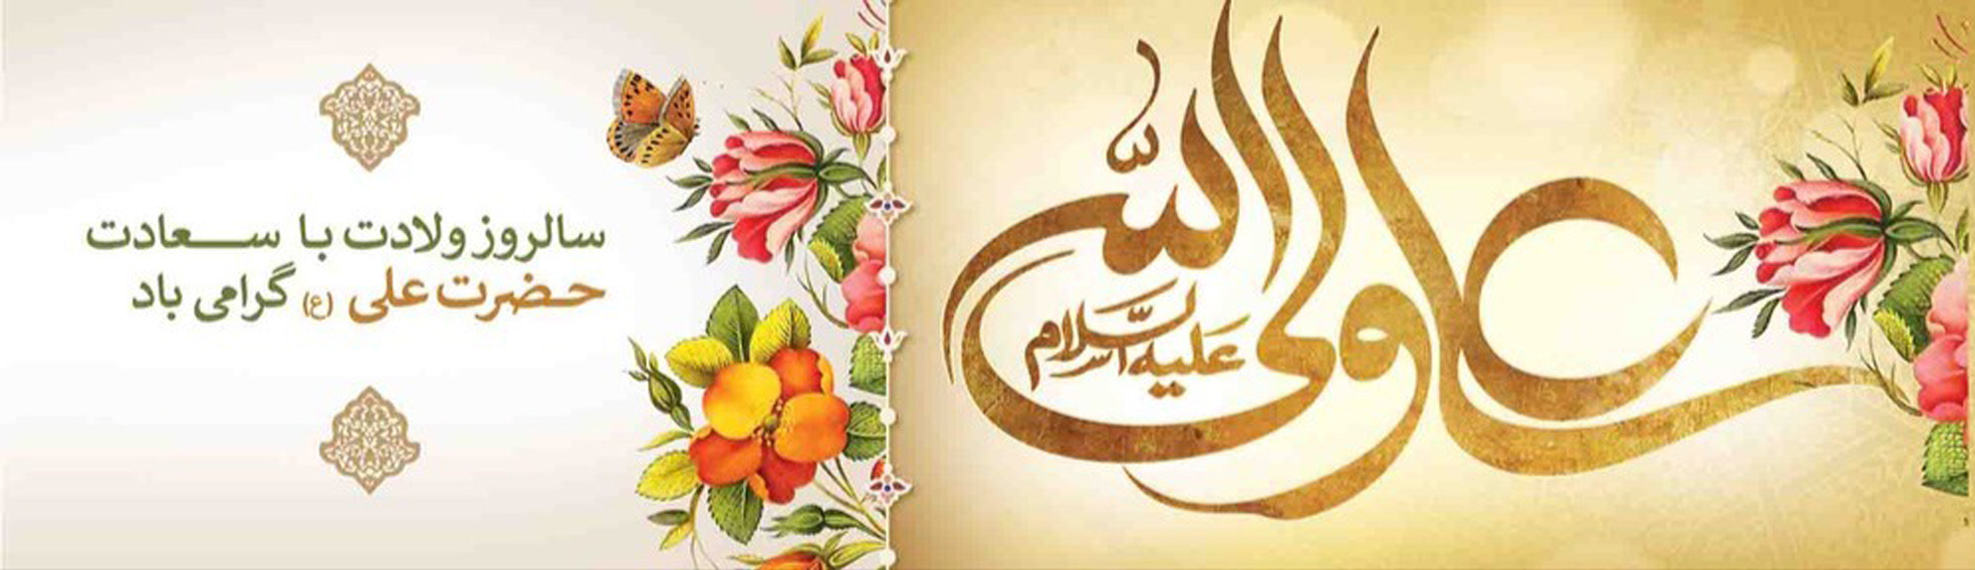 Congratulations on the birth anniversary of Imam Ali (AS).